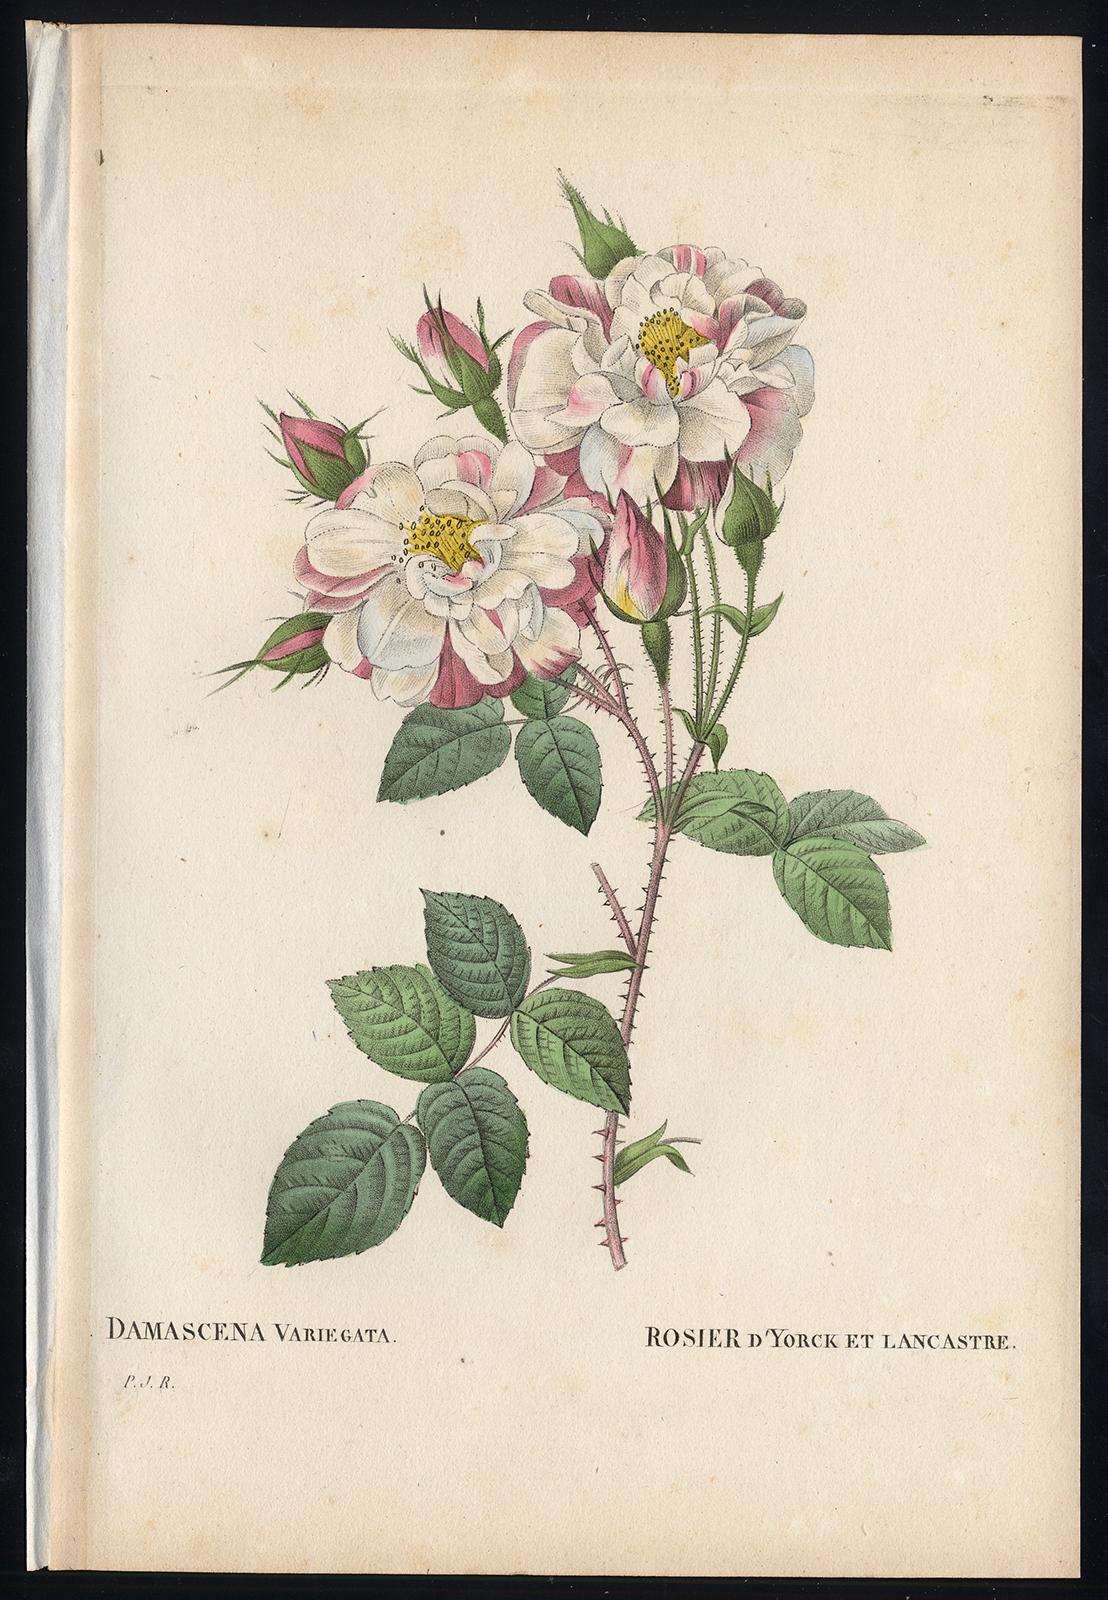 Pierre-Joseph Redouté Print - Lancaster Rose by Redoute - Les Roses - Handcoloured engraving - 19th century